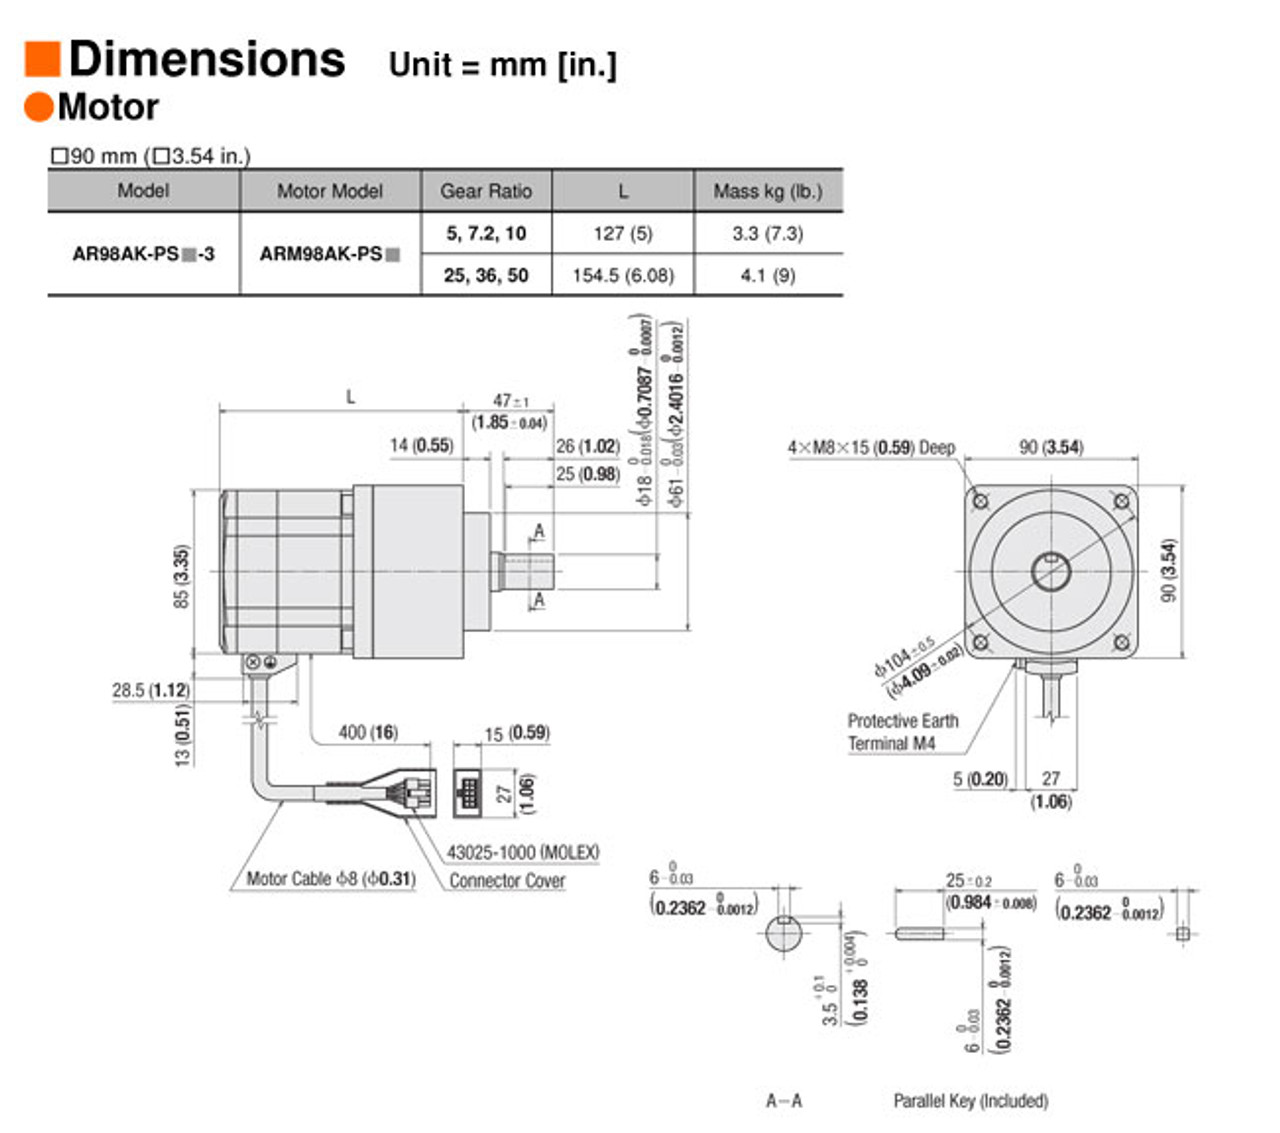 AR98AK-PS25-3 - Dimensions